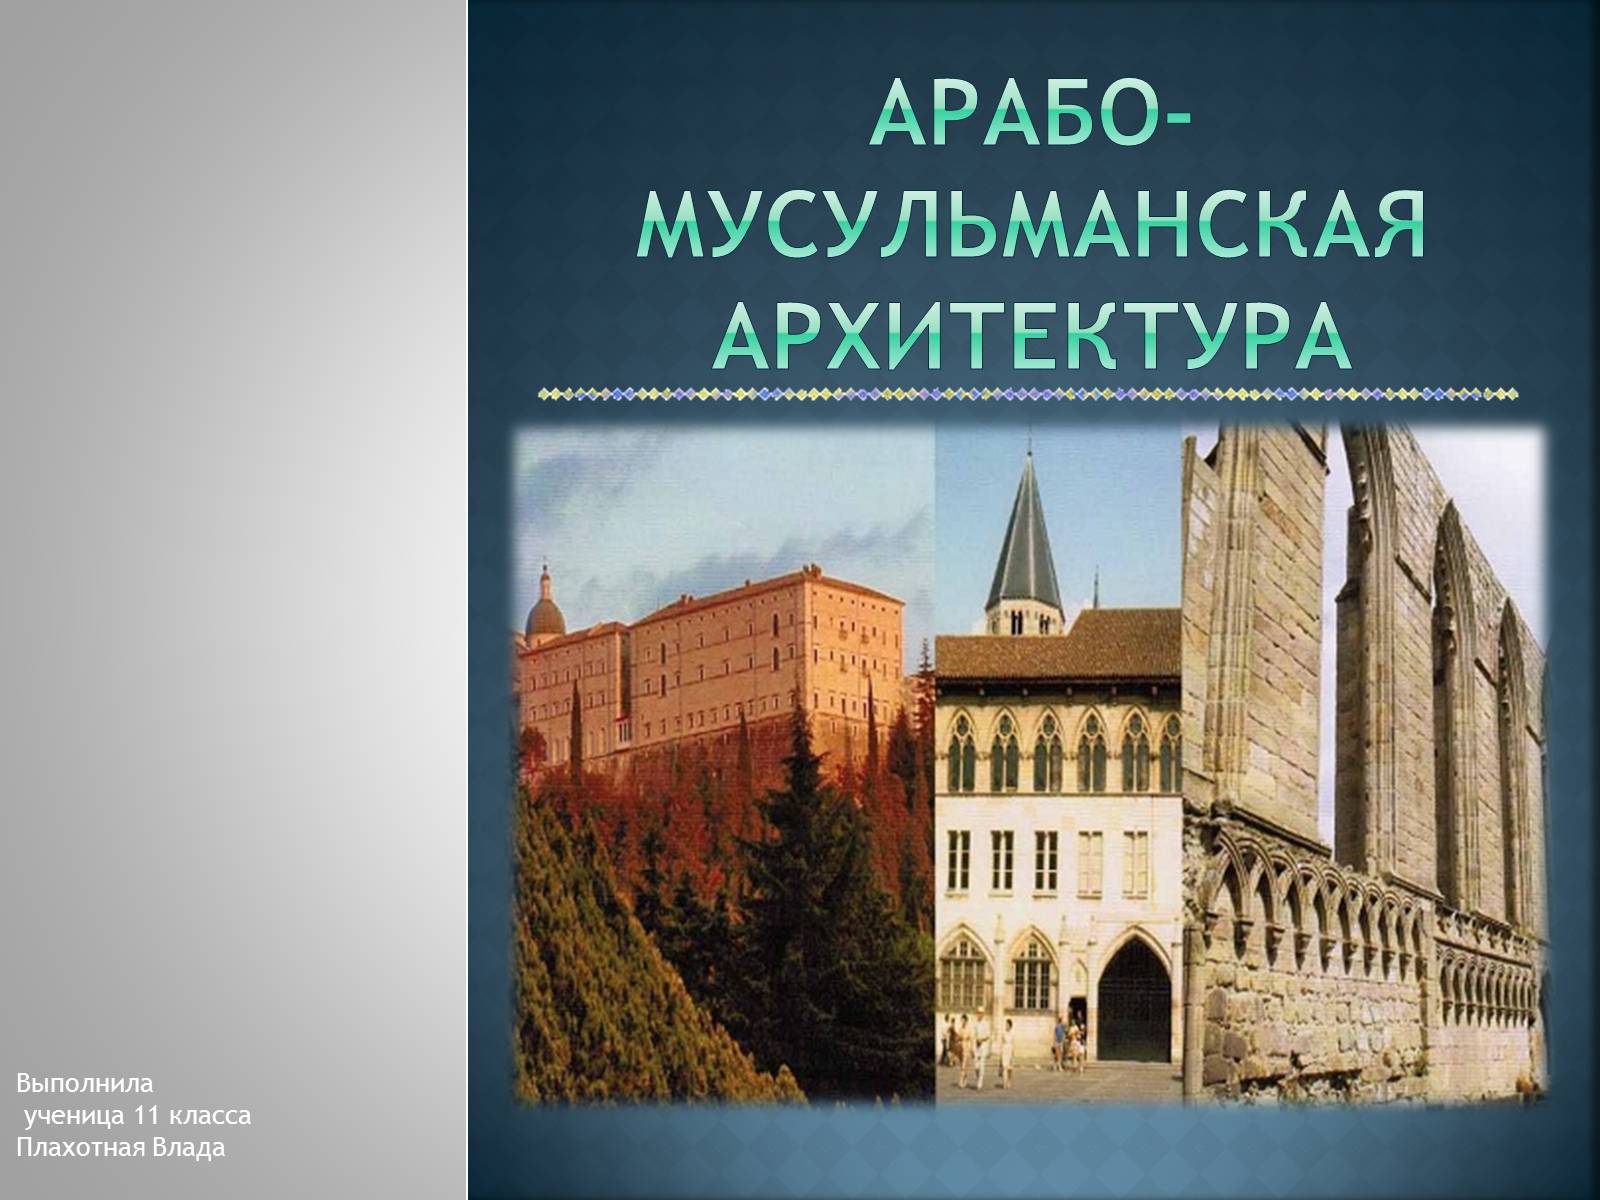 Презентація на тему «Арабо-мусульманская архитектура» (варіант 1) - Слайд #1